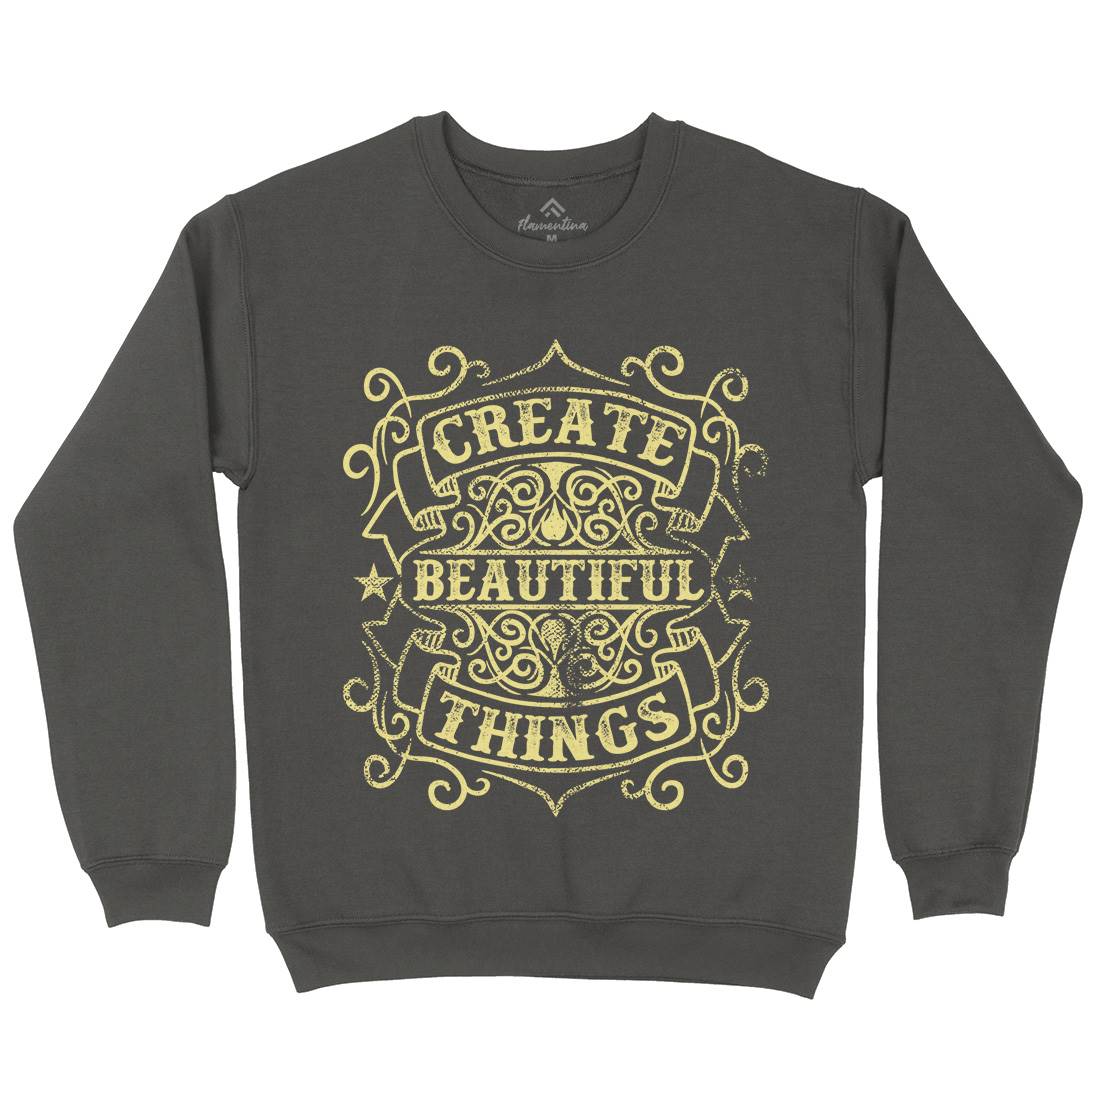 Create Beautiful Things Kids Crew Neck Sweatshirt Quotes C919